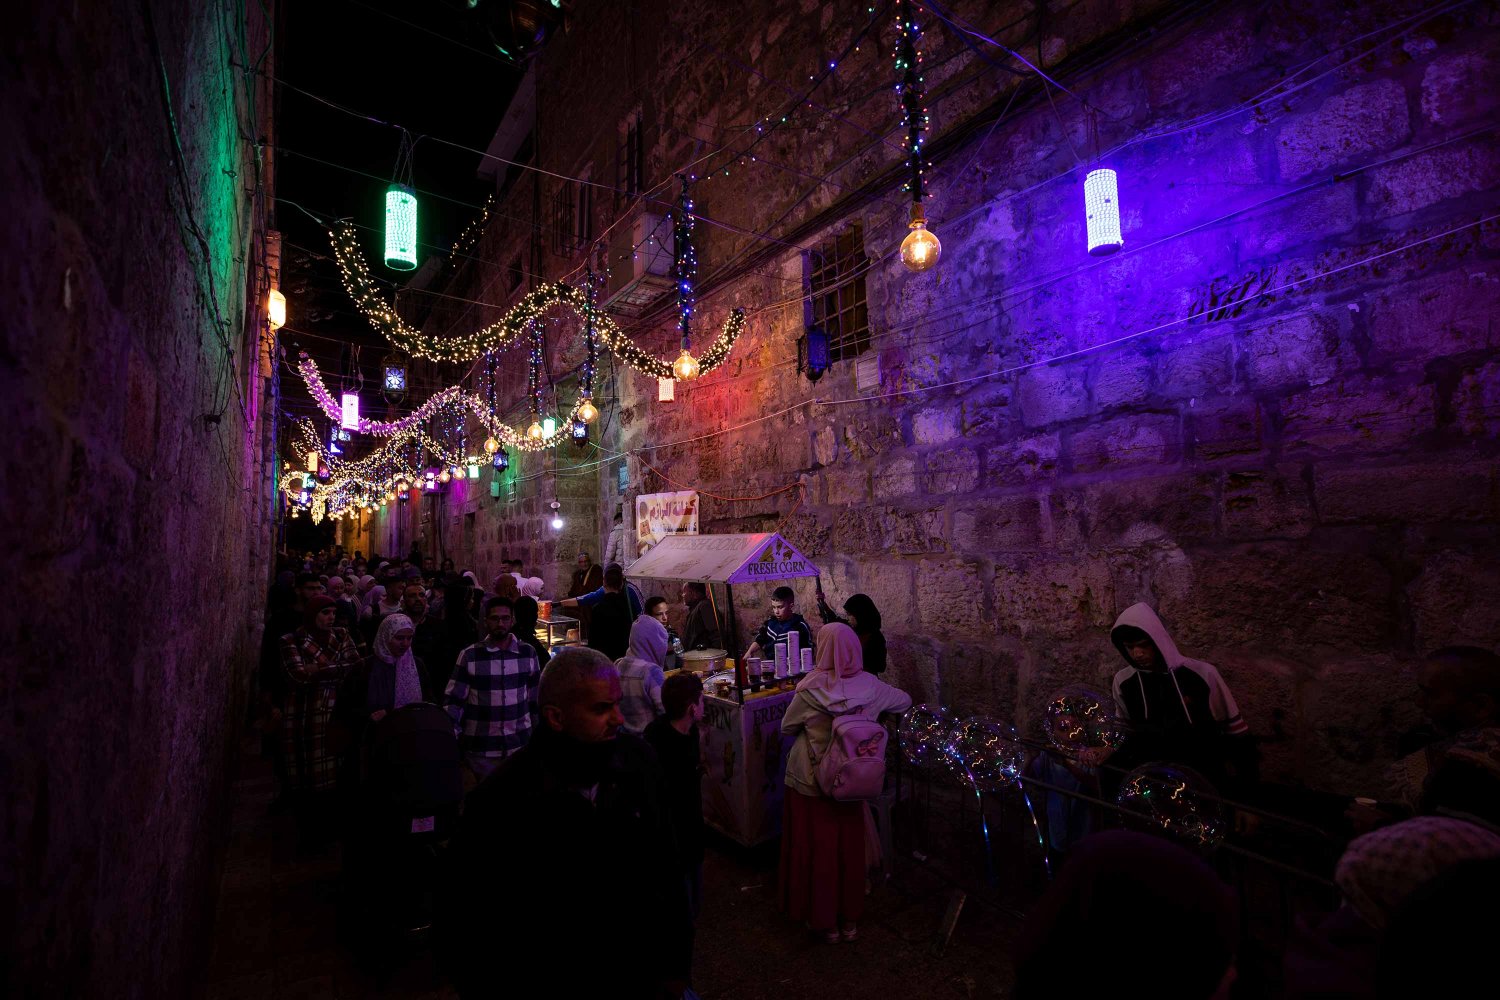 Palestinians enjoy Ramadan snacks and festivities in Jerusalem's Old City